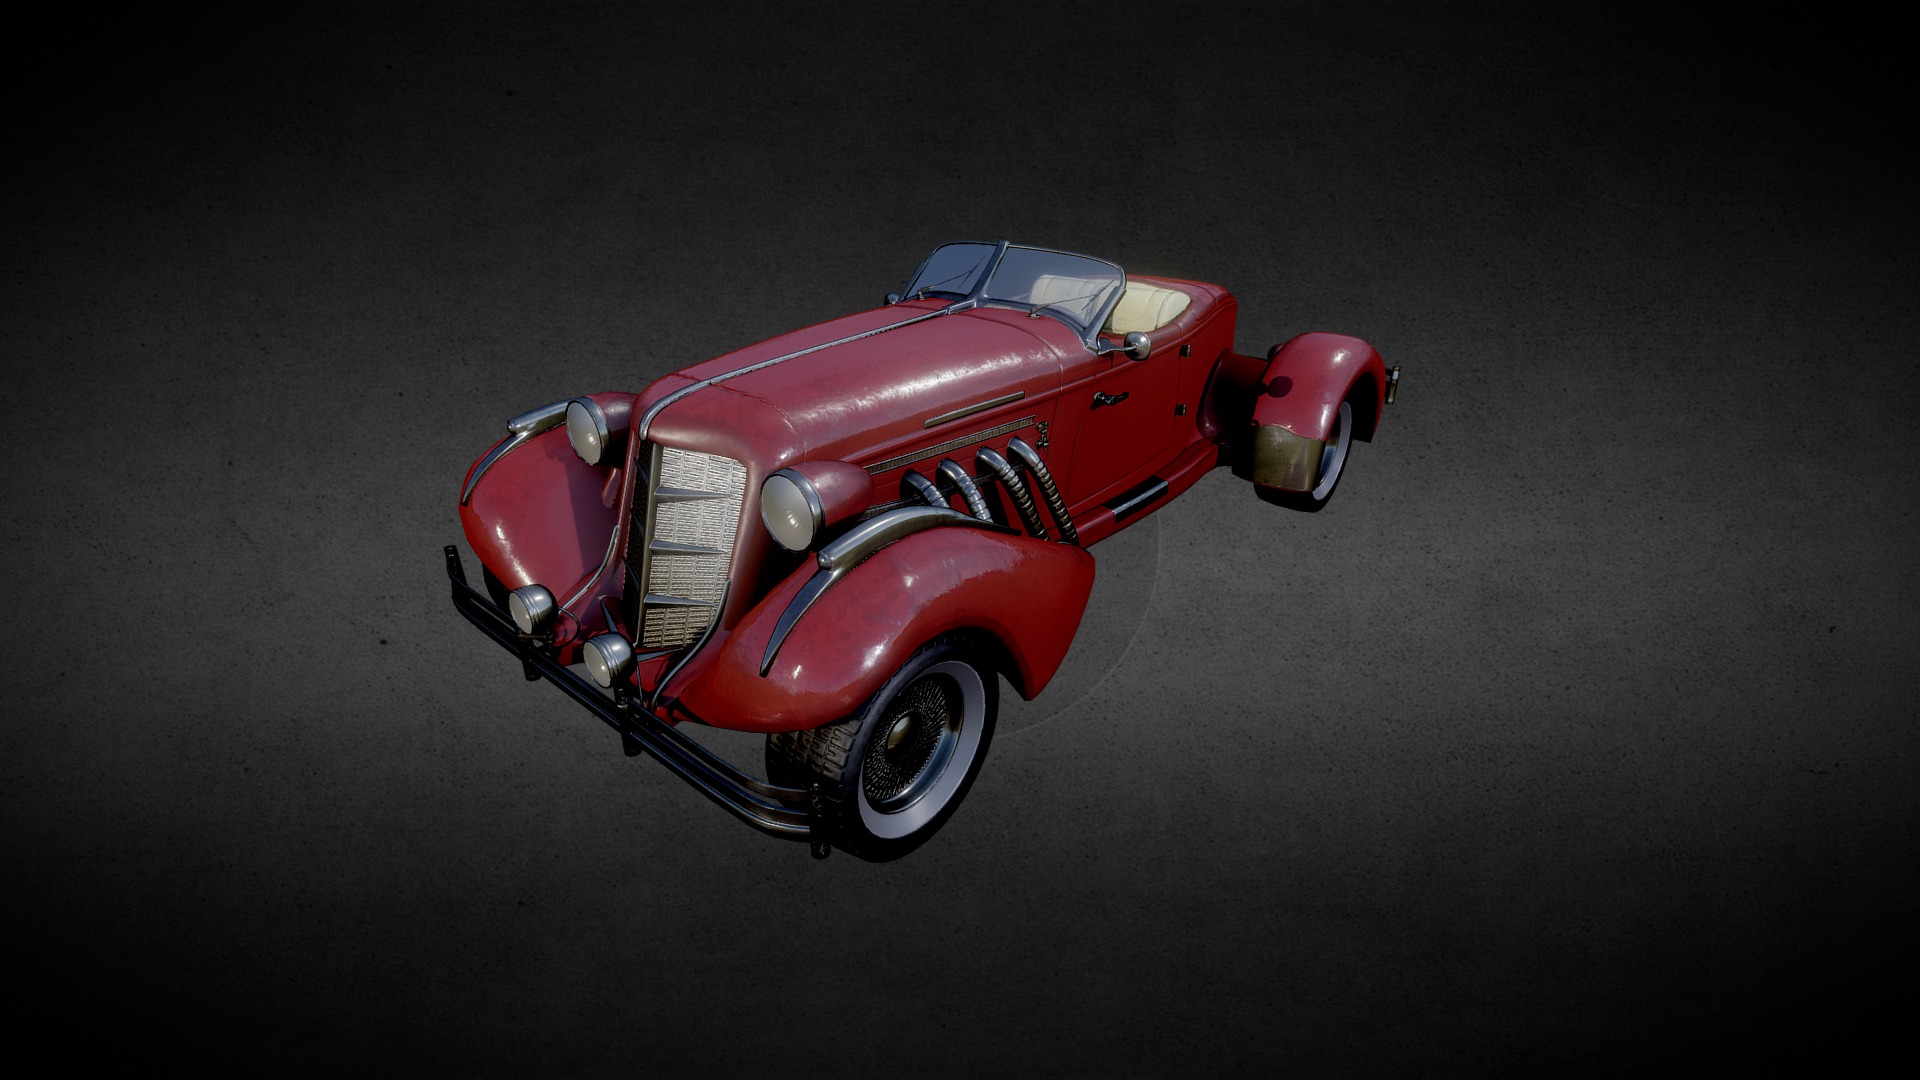 3D model 1936 Auburn Speedster - This is a 3D model of the 1936 Auburn Speedster. The 3D model is about a red convertible car.